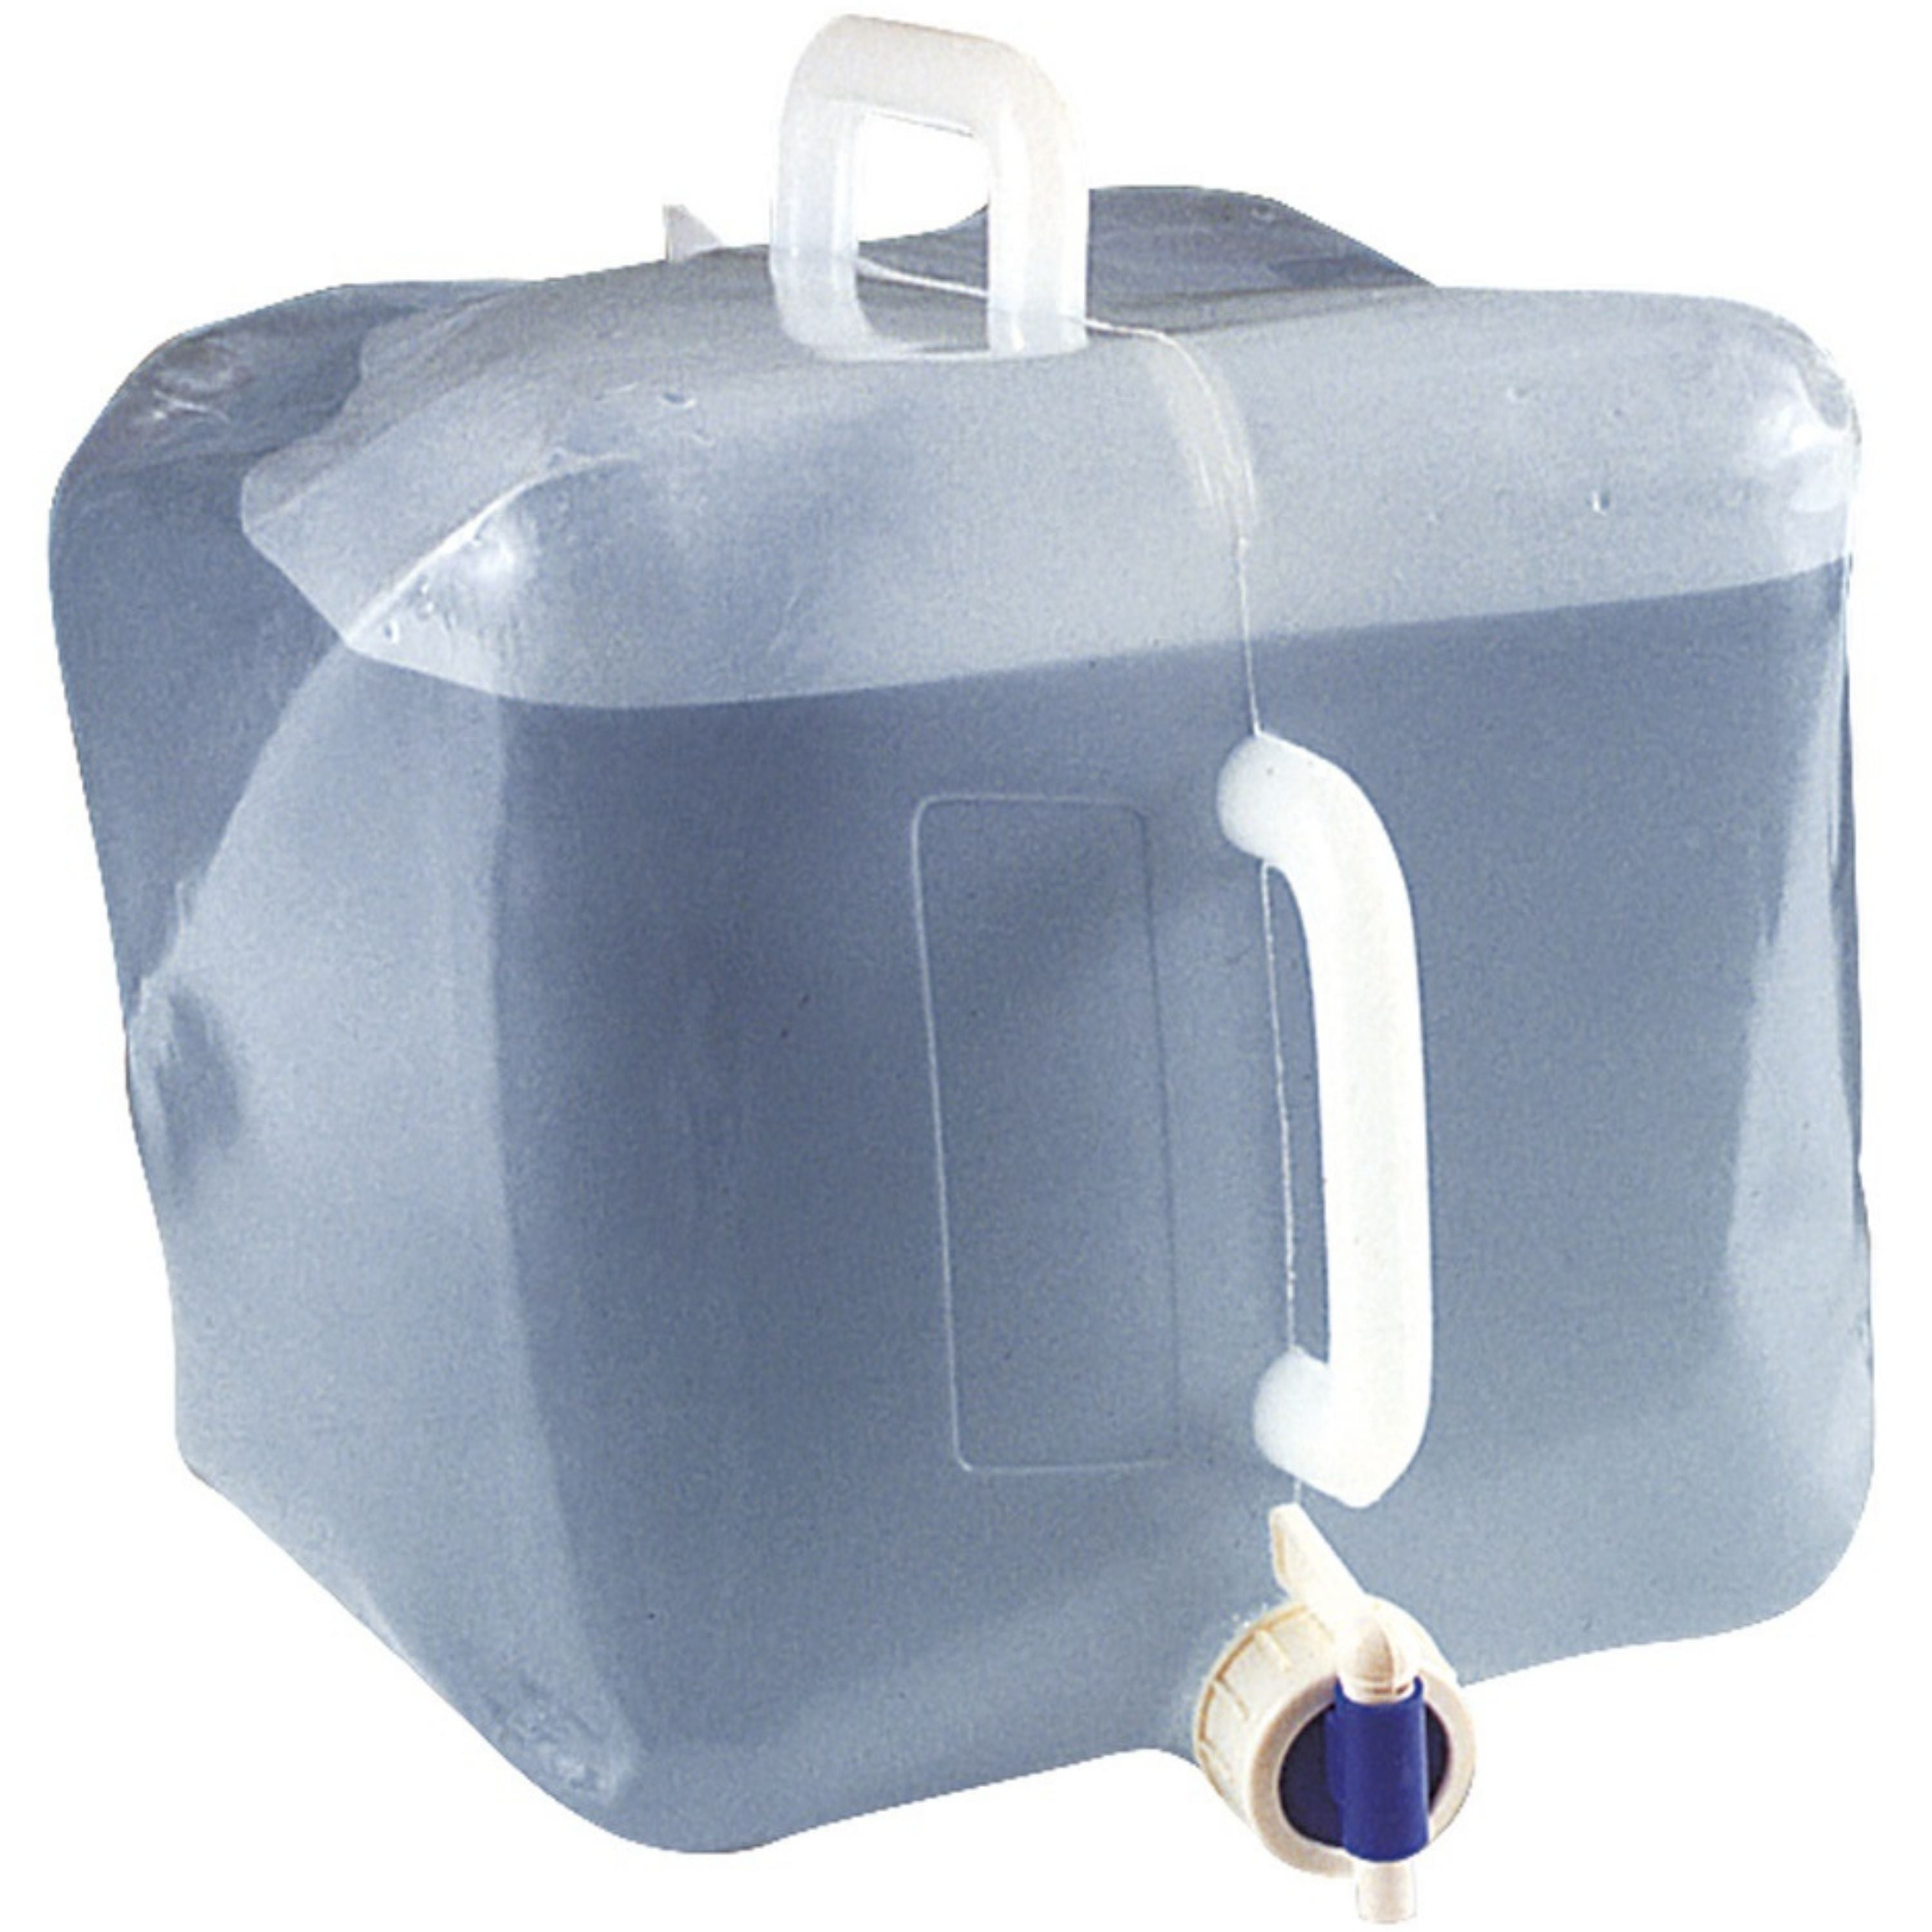 Collapsing water jug - 20 L